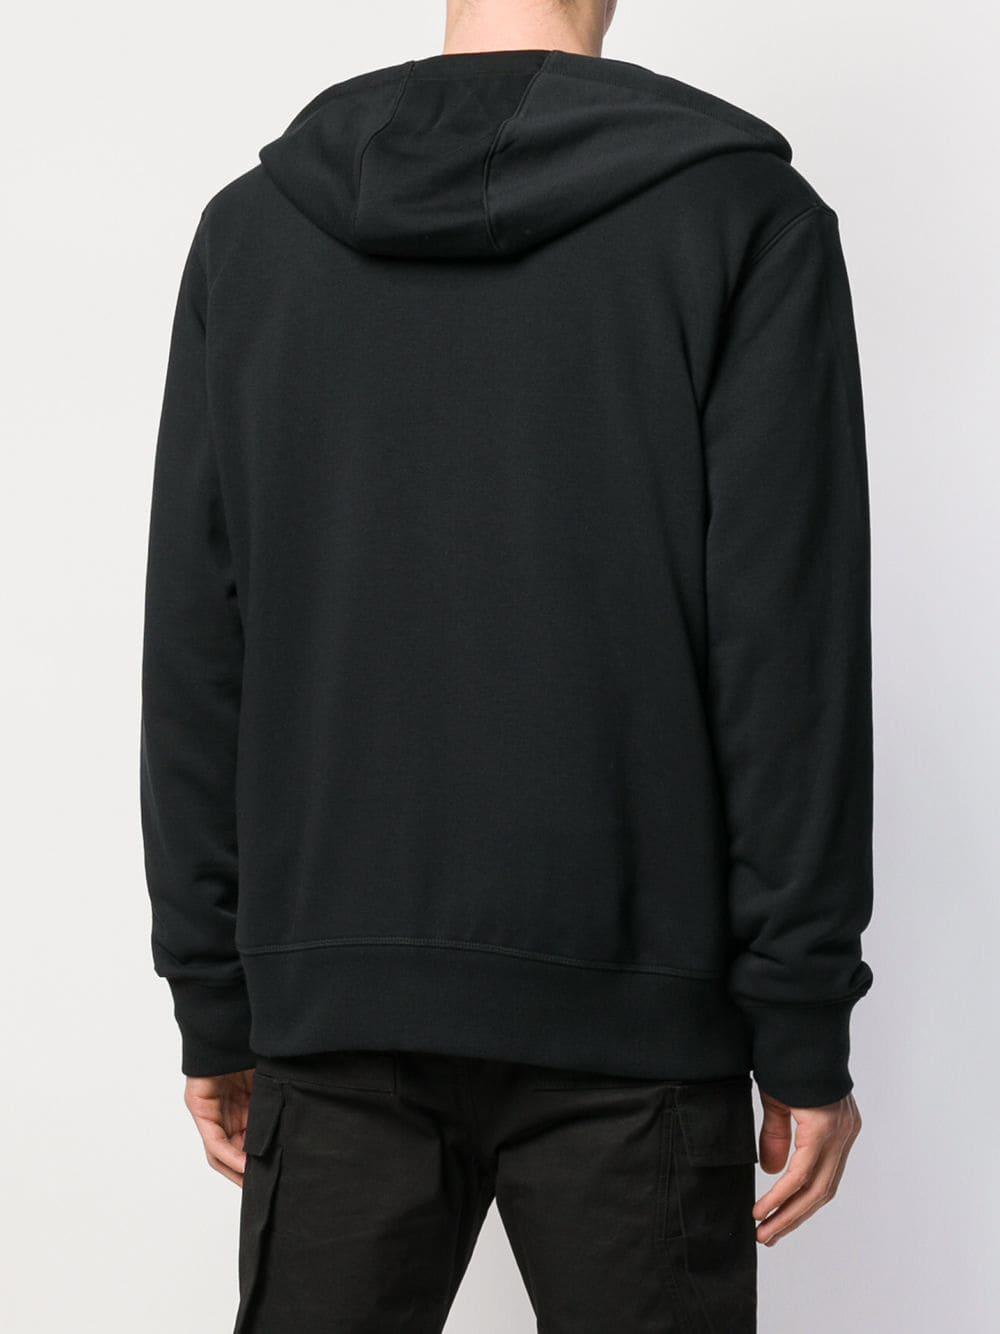 New Balance Cotton Hooded Sweatshirt in Black for Men - Lyst